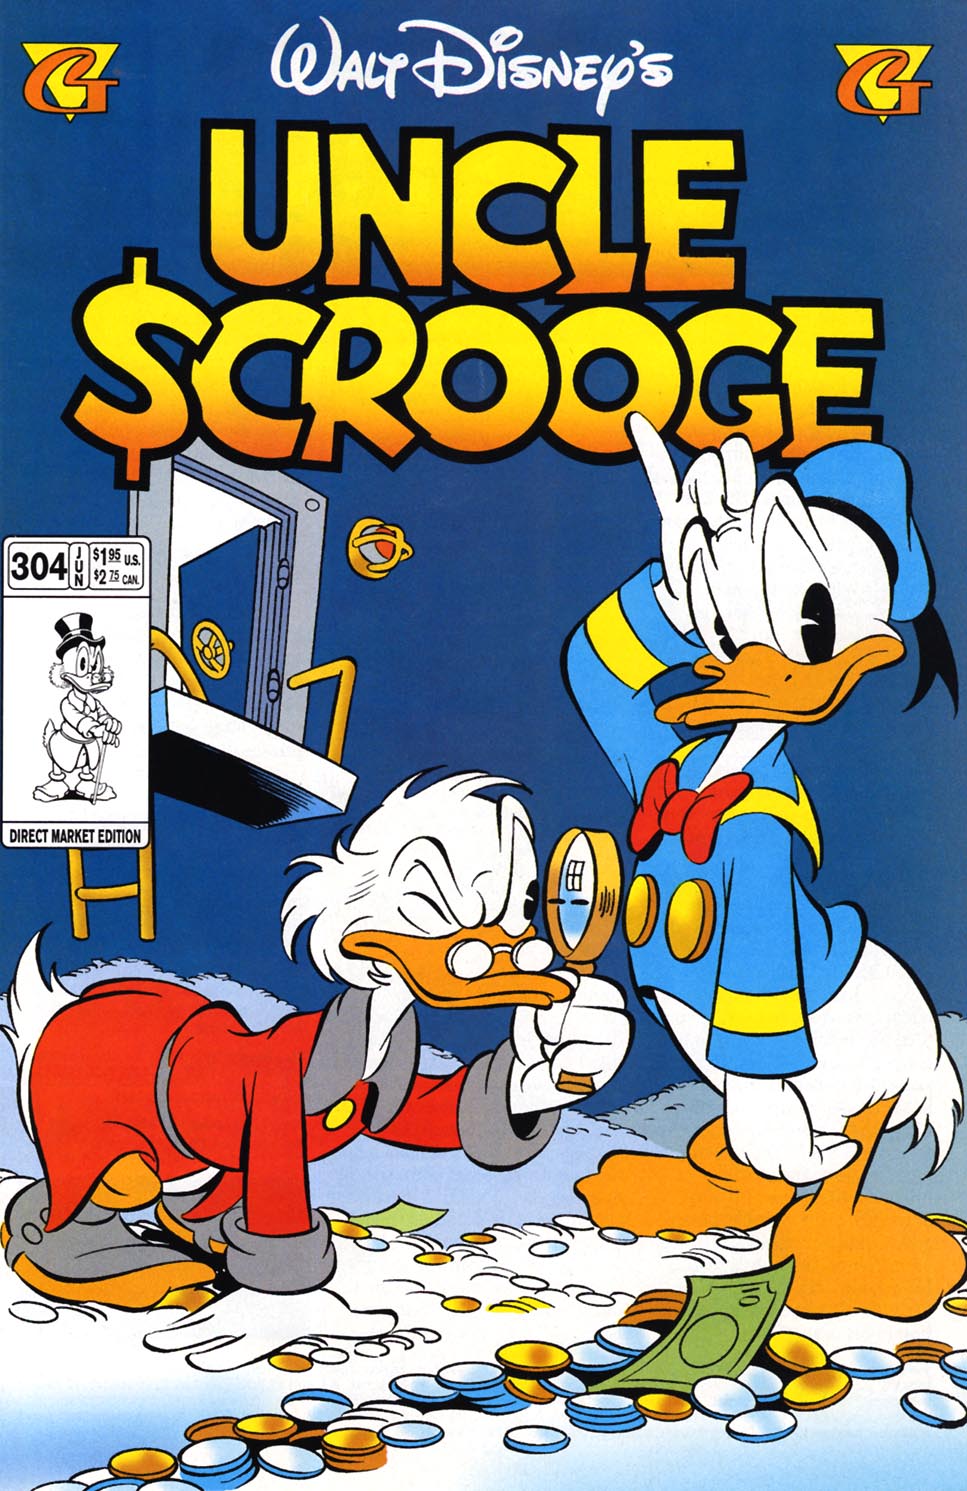 Mr private. Uncle Scrooge. Uncle Scrooge Christmas book.